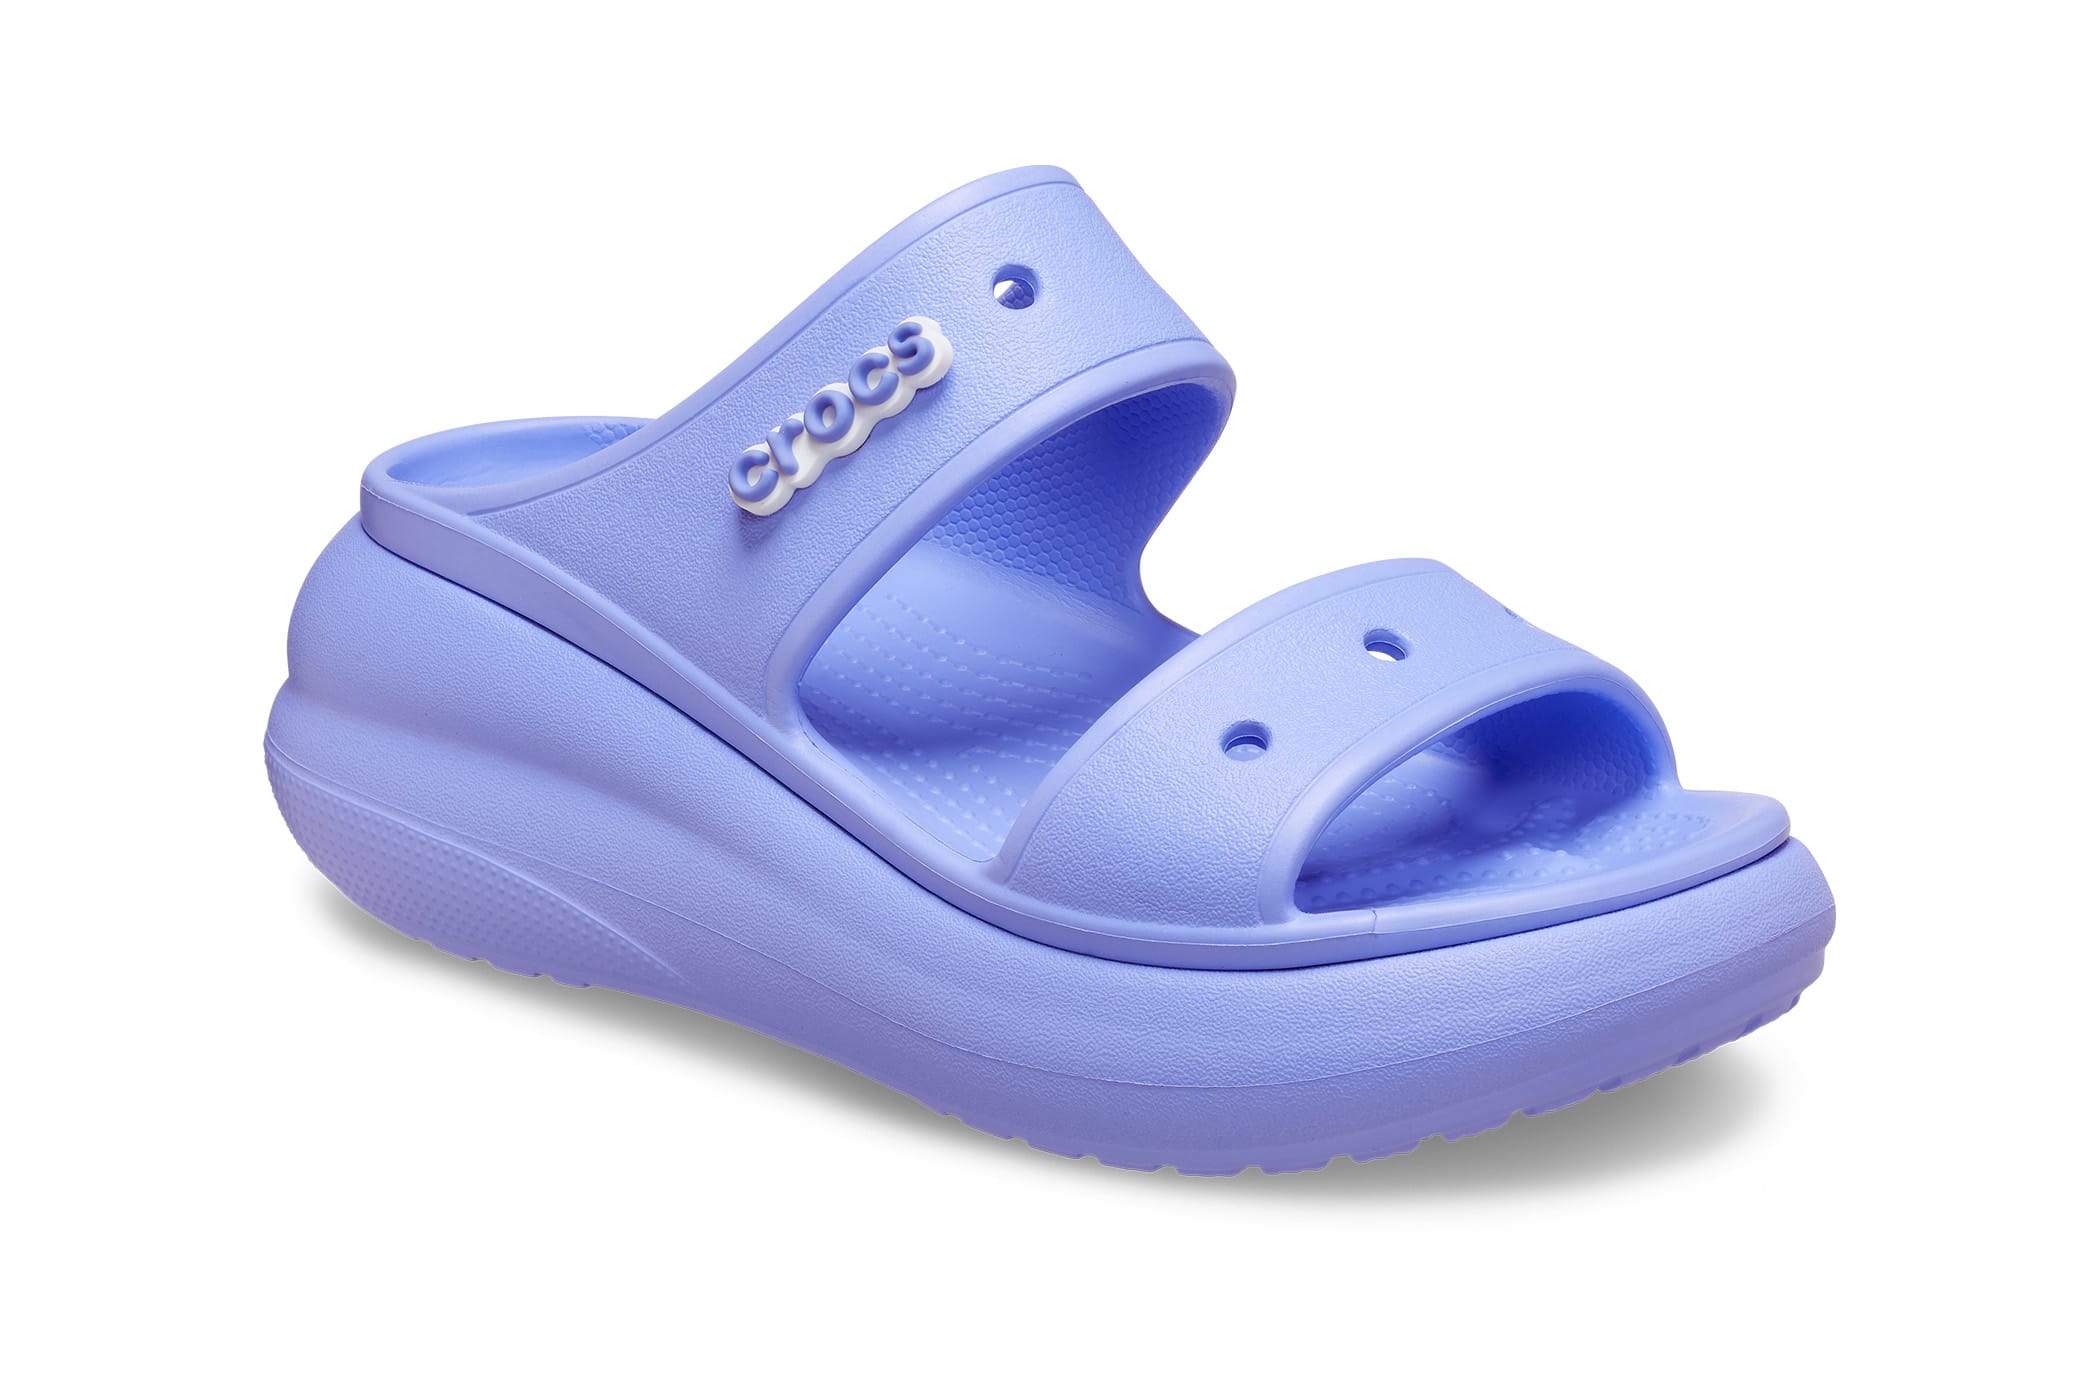 Buy Crocs Unisex-Adult Classic Sandal Online India | Ubuy